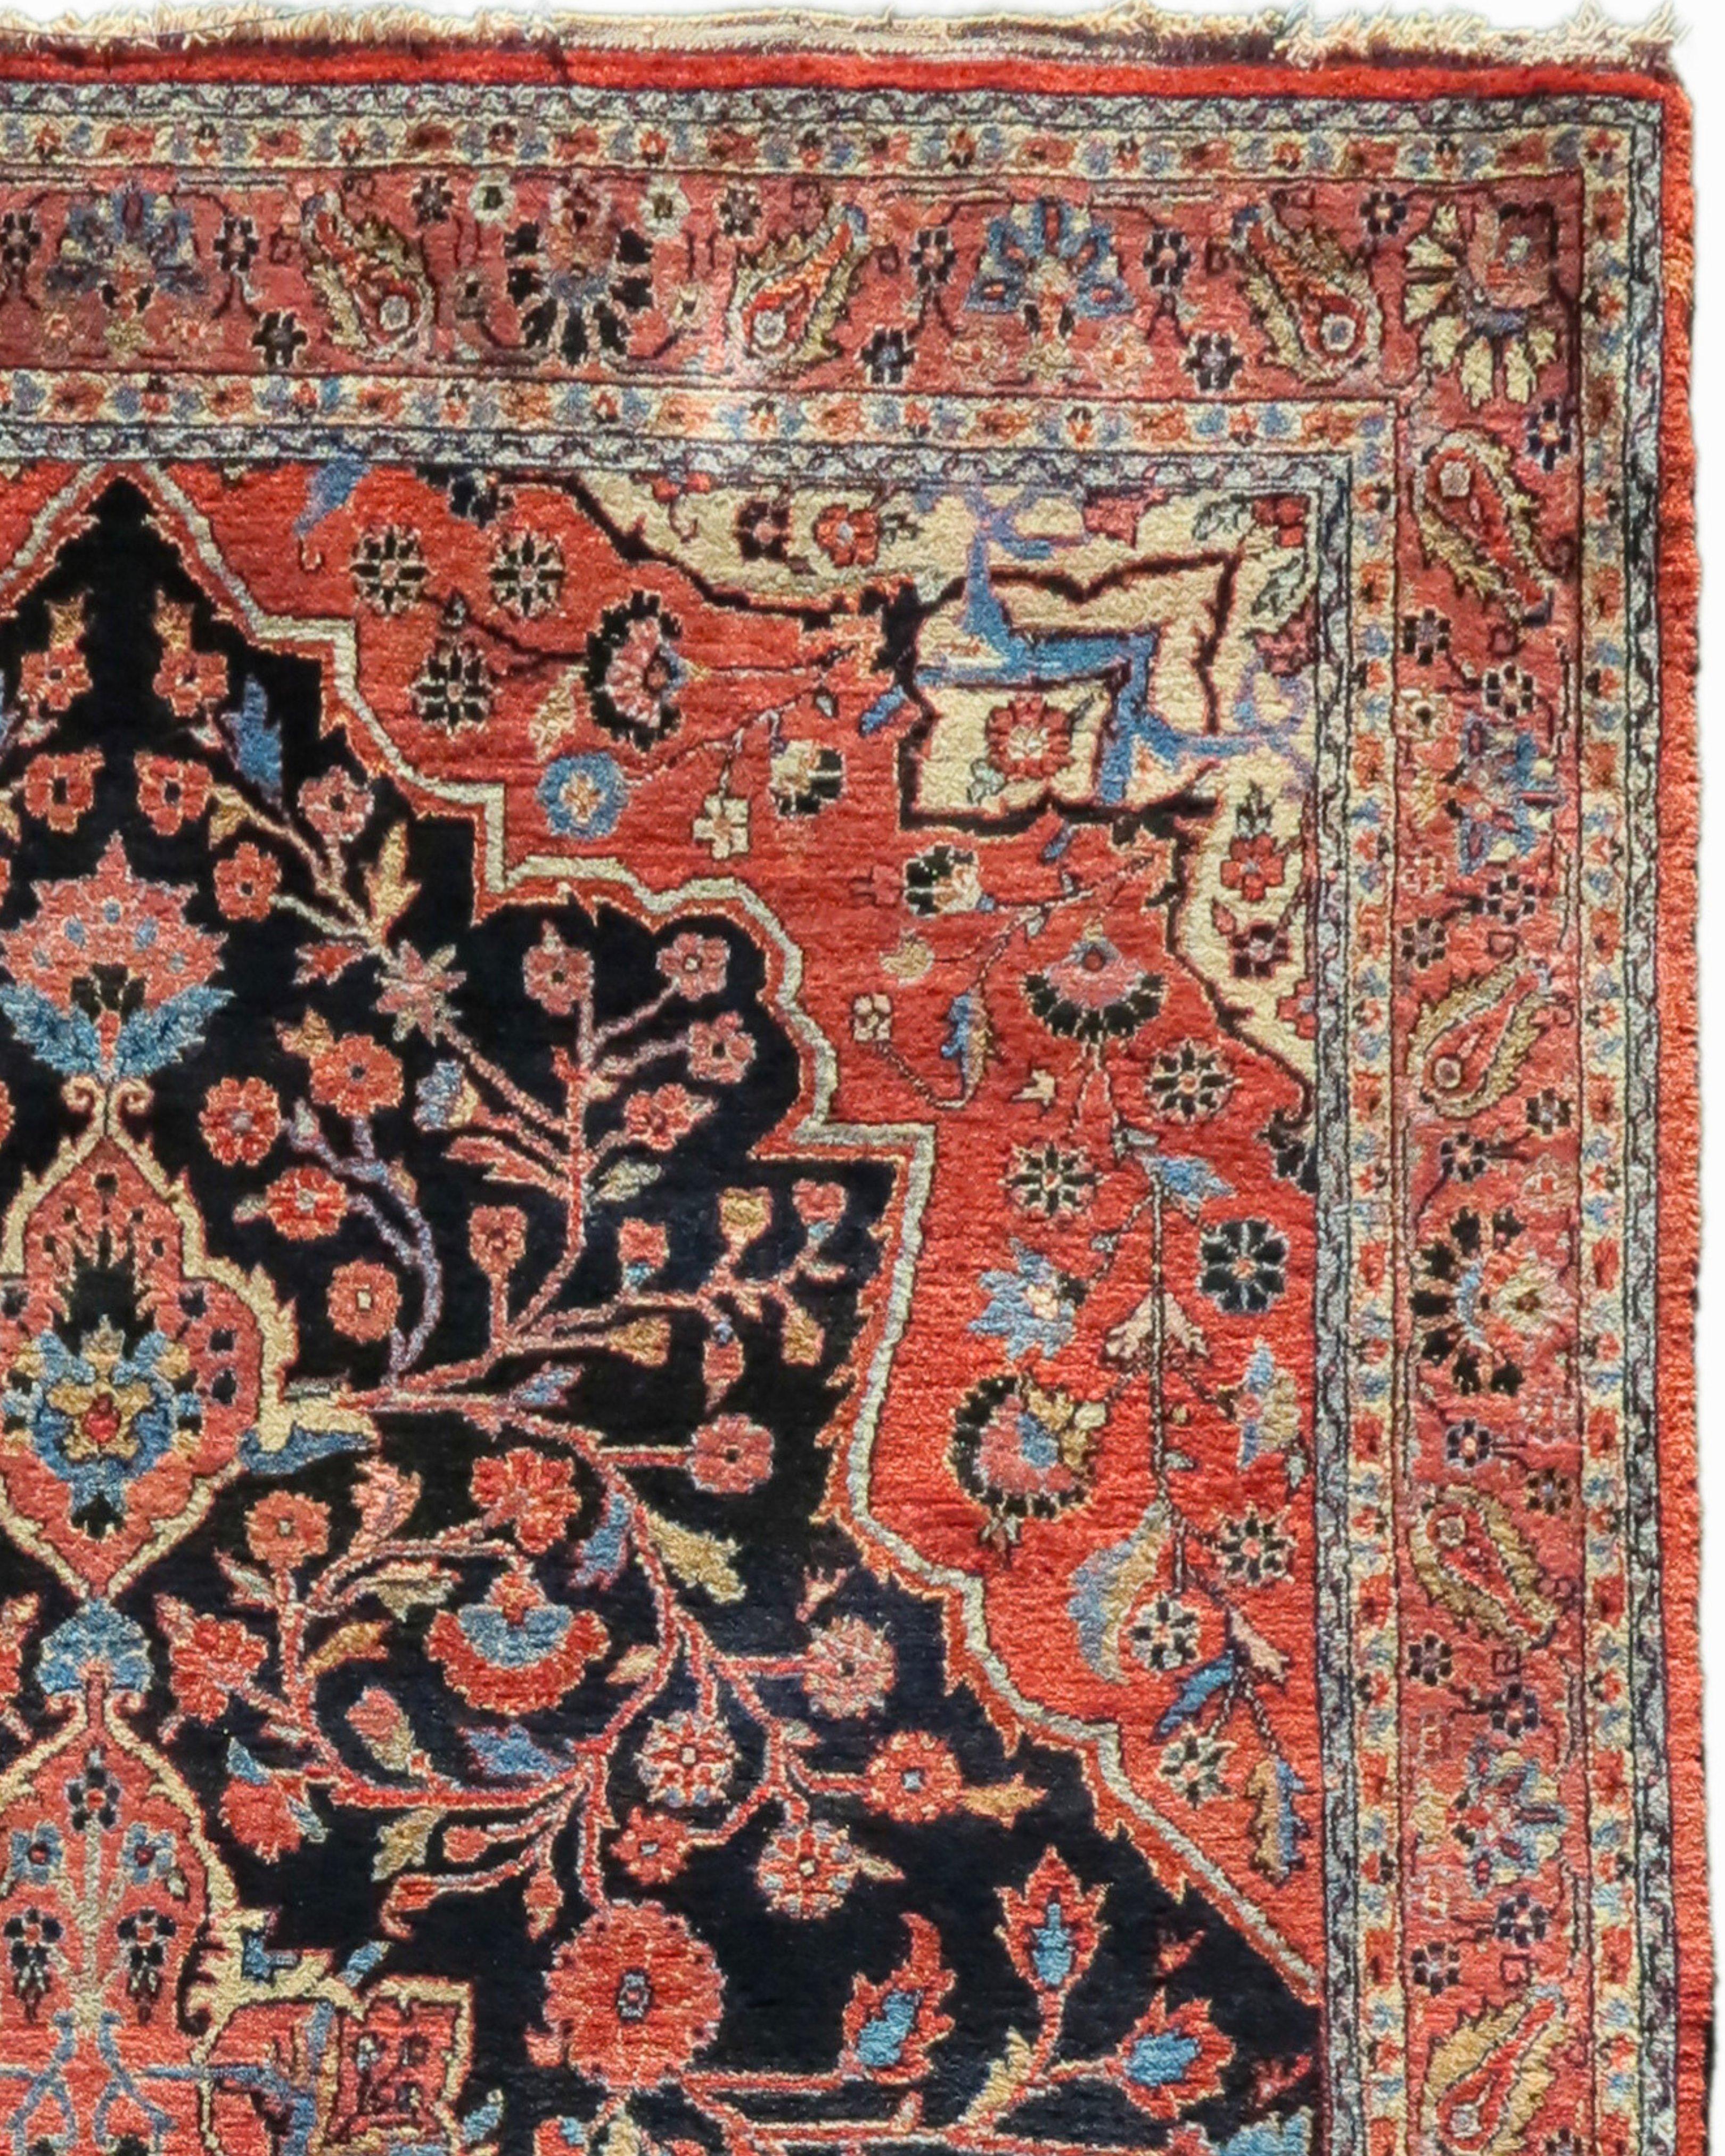 Semi-Antique Persian Josan Sarouk Rug, 20th Century

Excellent original condition.

Additional Information:
Dimensions: 4'5